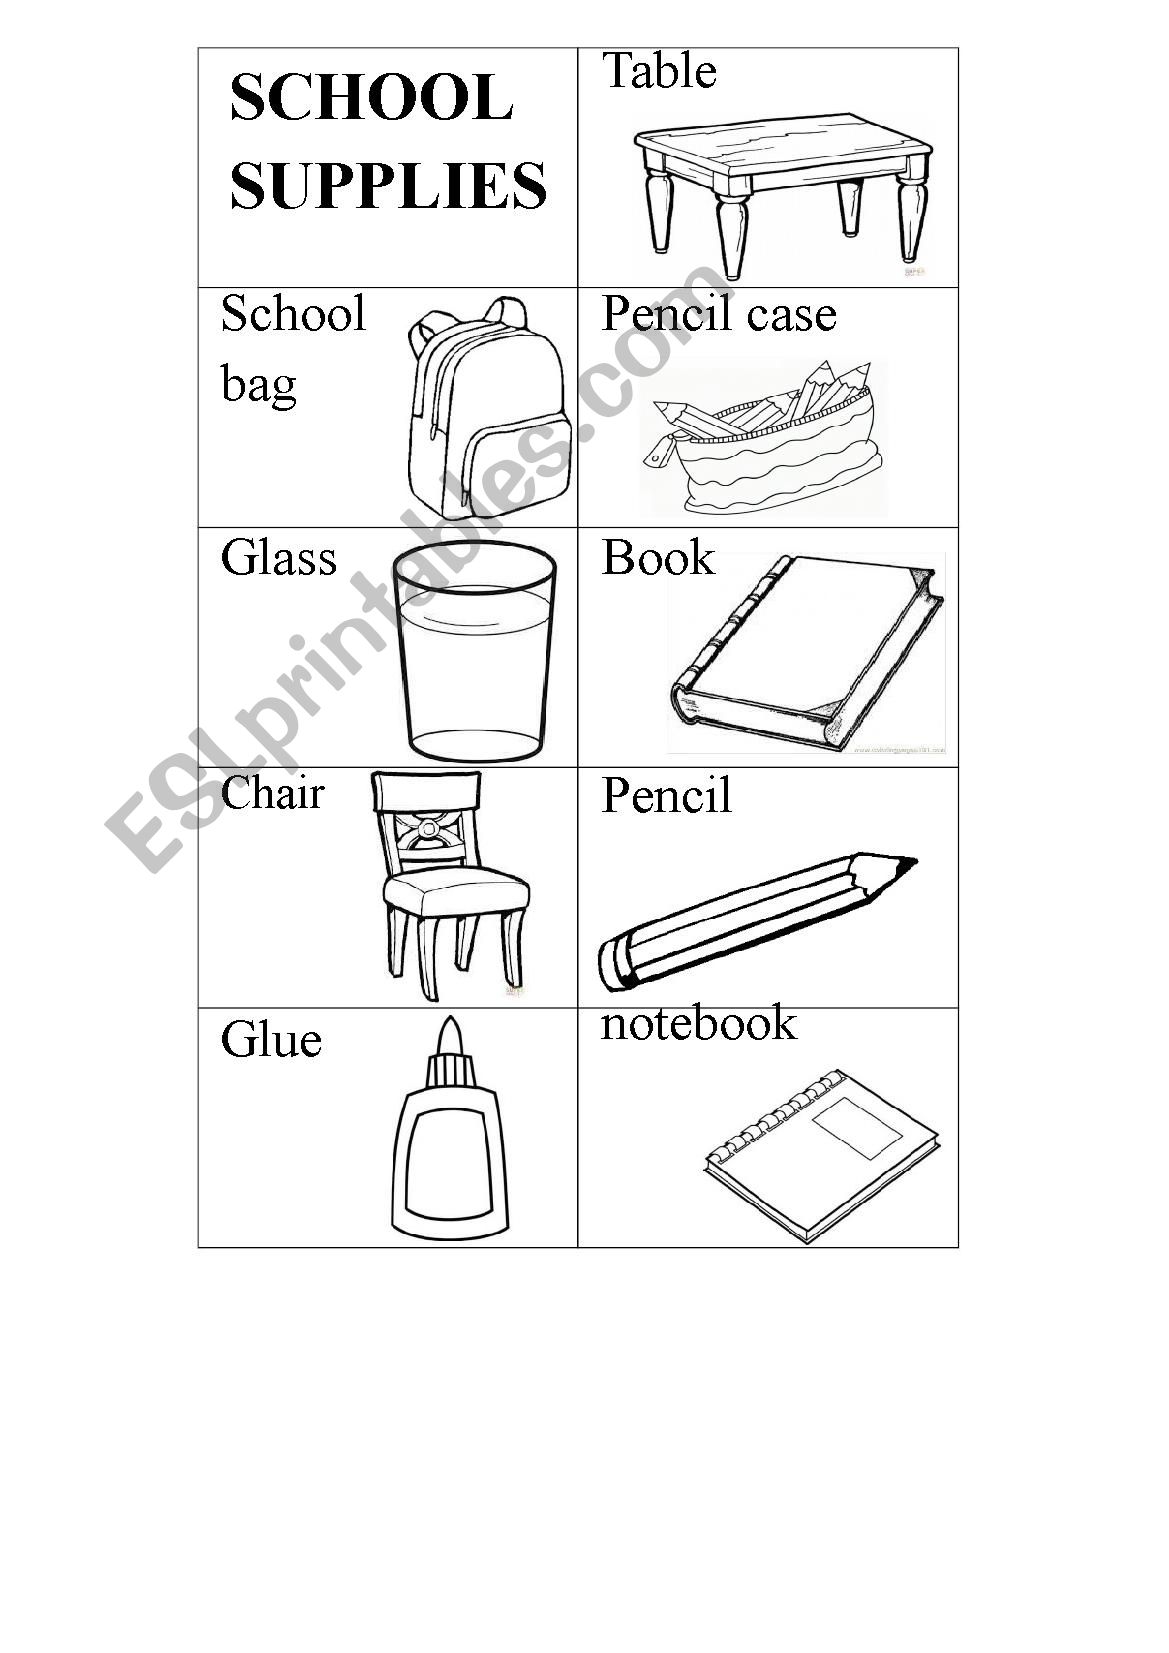 SCHOOL SUPPLIES worksheet